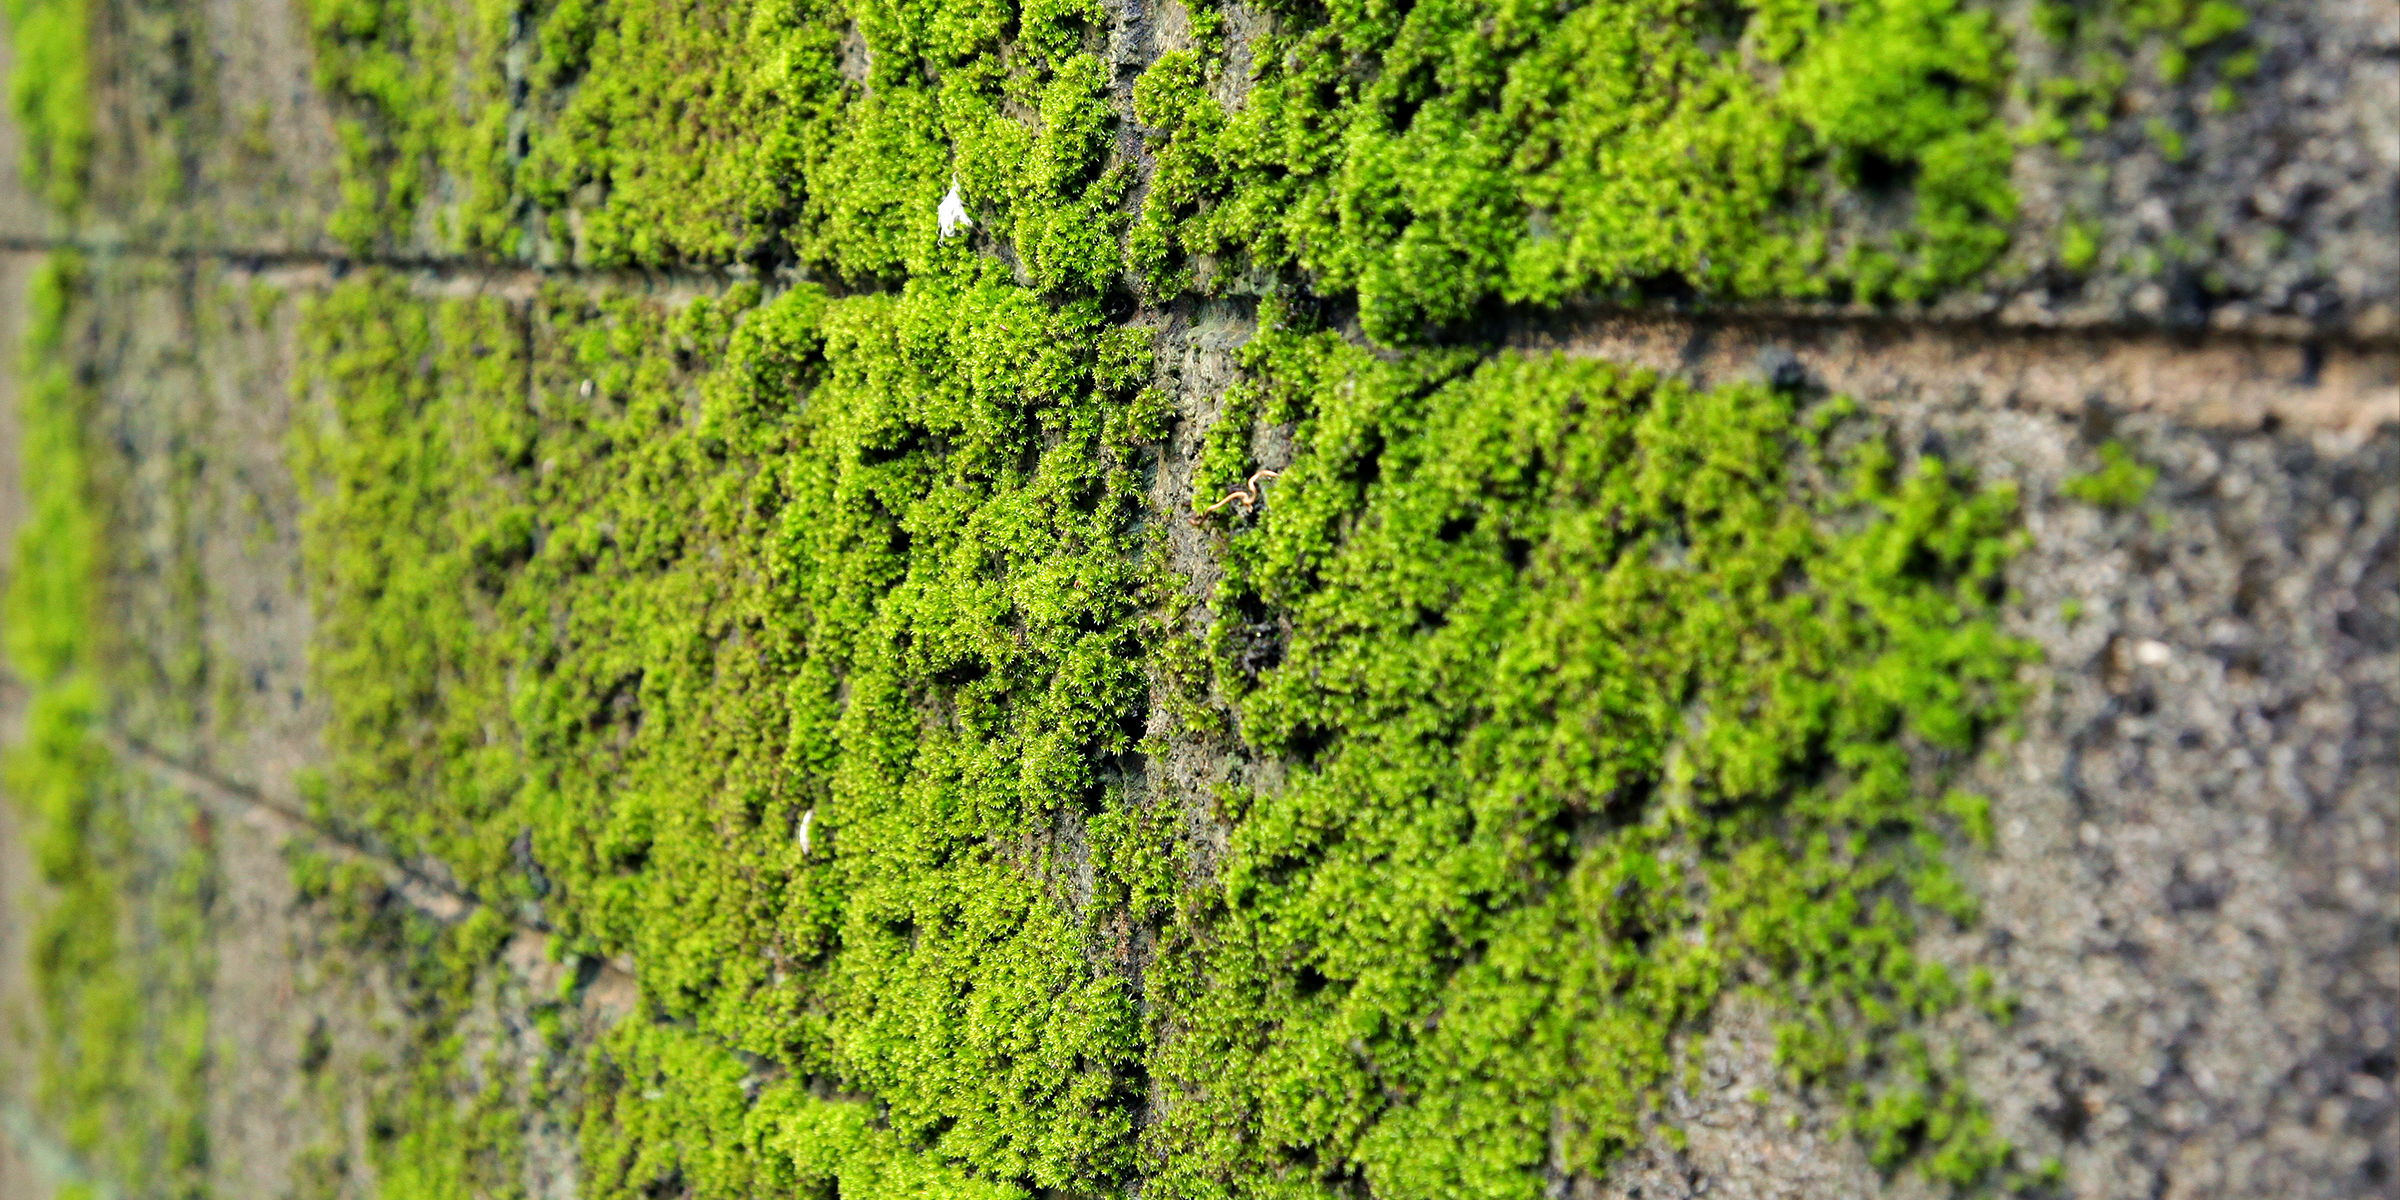 Moss on concrete | Source: Shutterstock